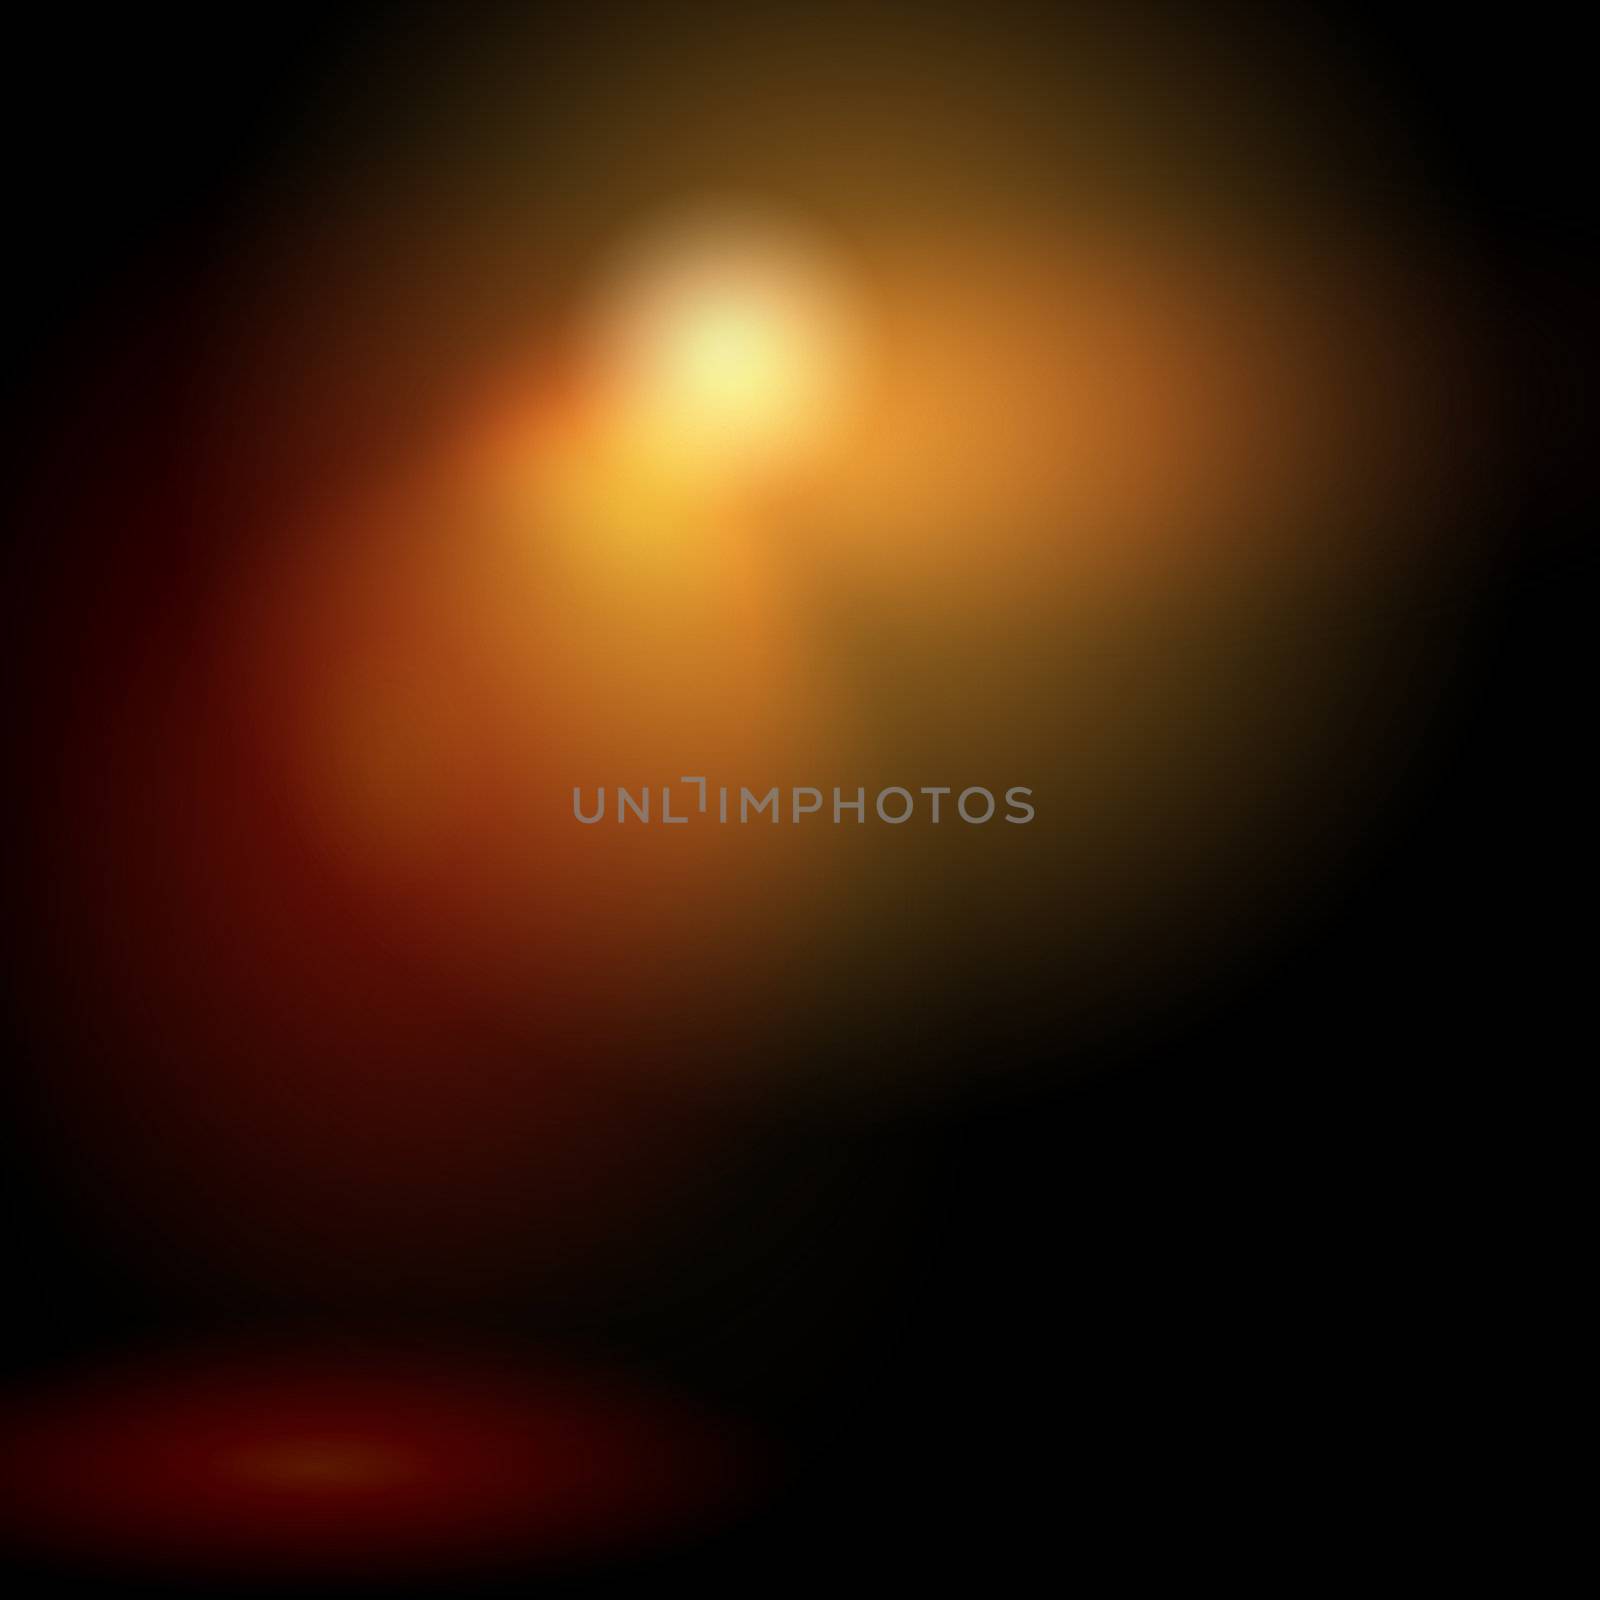 Black background with colour blurred light spot. Illustration